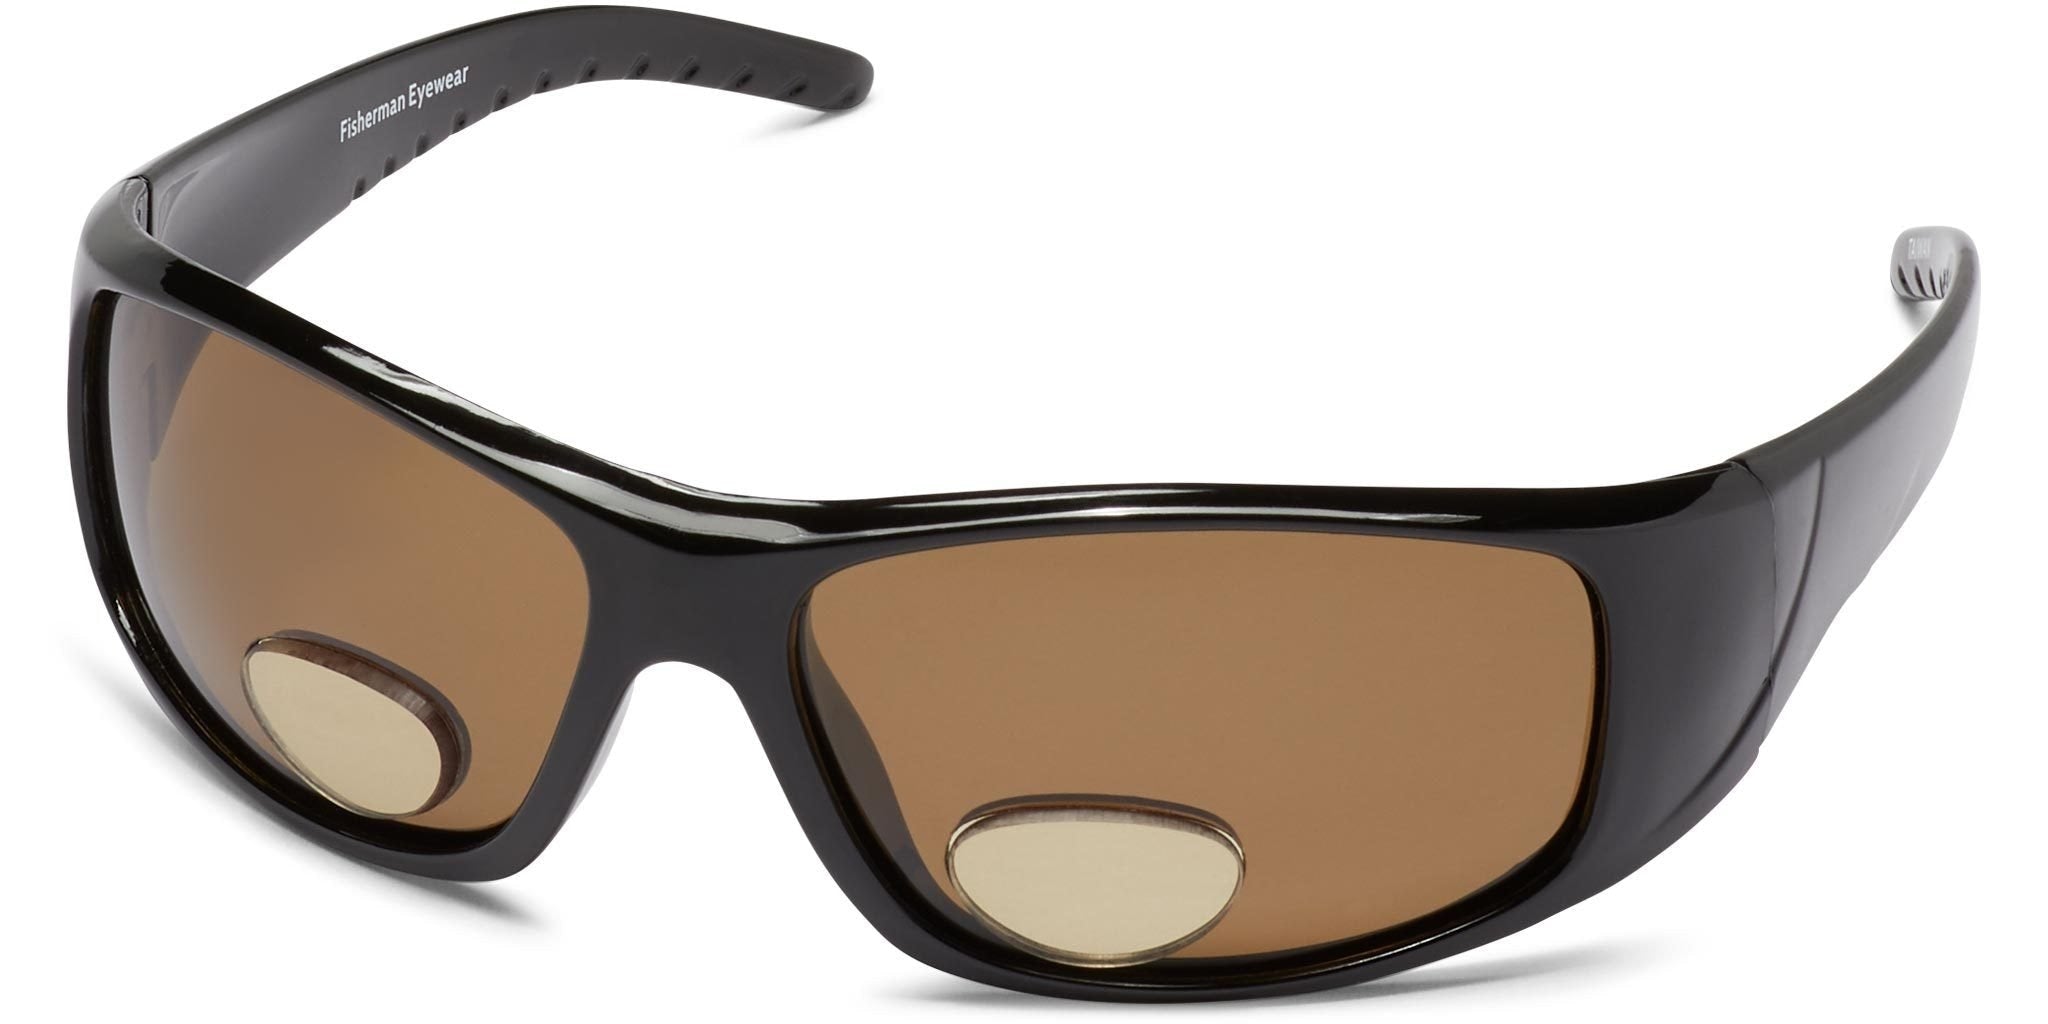 Vejfremstillingsproces Stationær Imidlertid ICU Eyewear - Polar View Bifocal Polarized Sunglasses Fisherman Eyewear